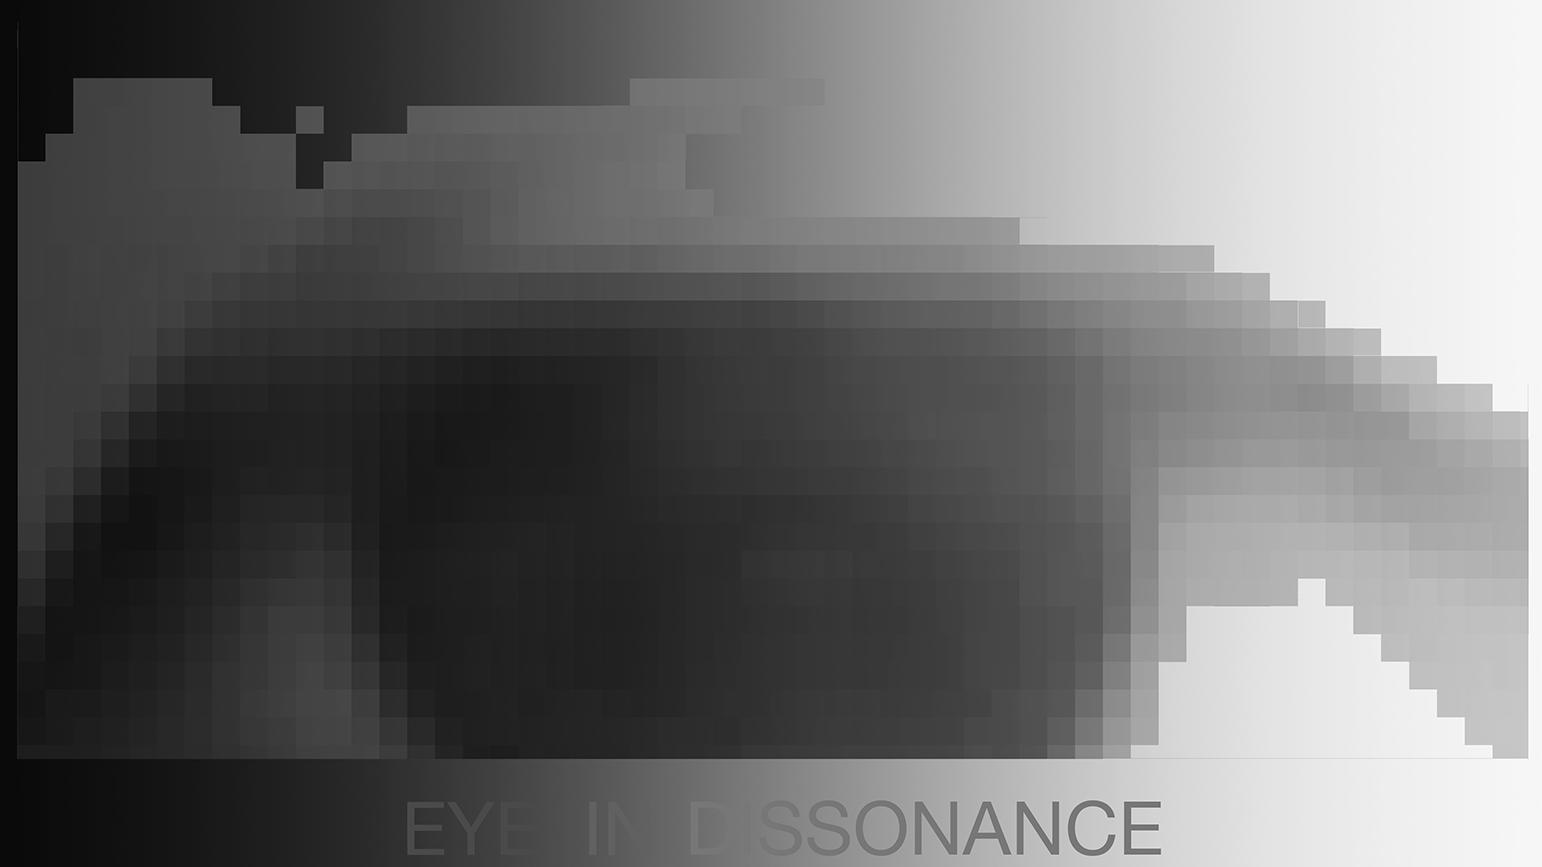 Pixelated form in grayscale with "Eye in Dissonance" written underneath